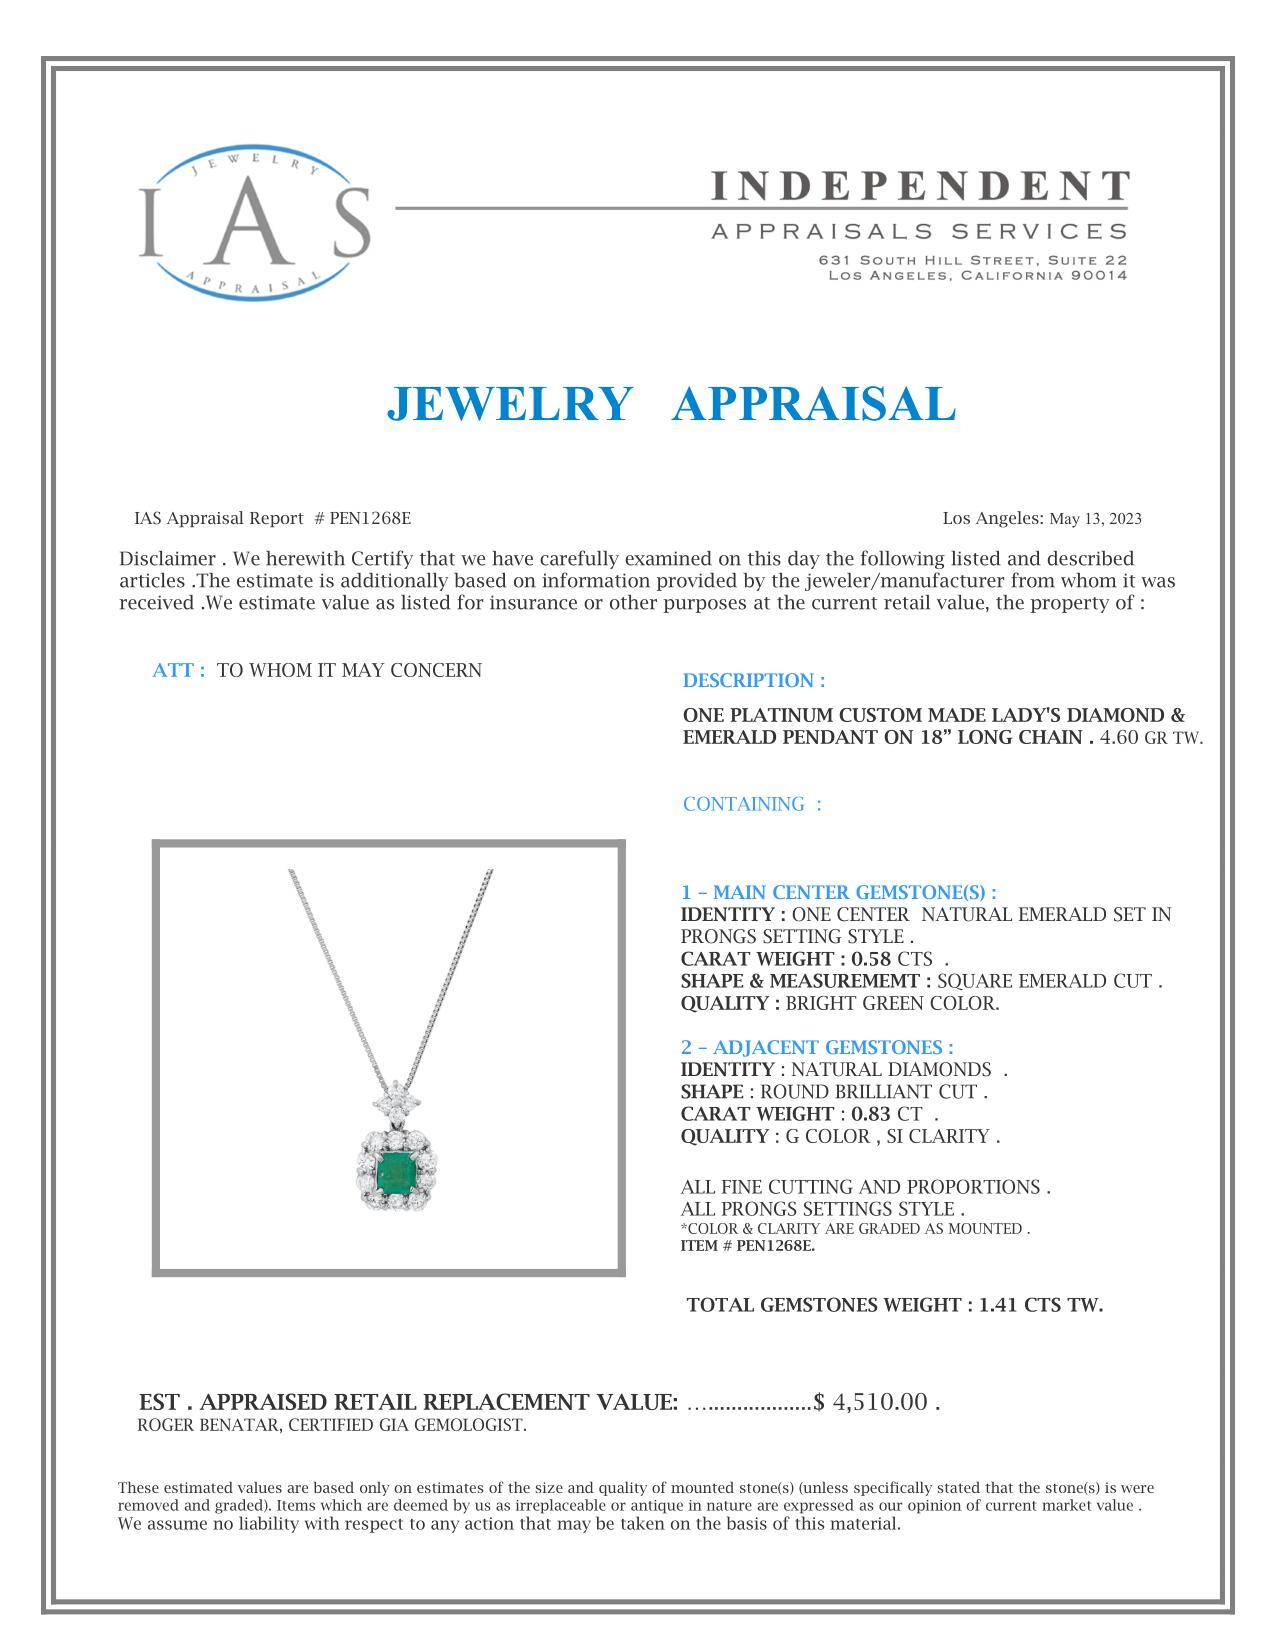 Platinum Setting with 0.58ct Emerald and 0.83ct Diamond Ladies Pendant